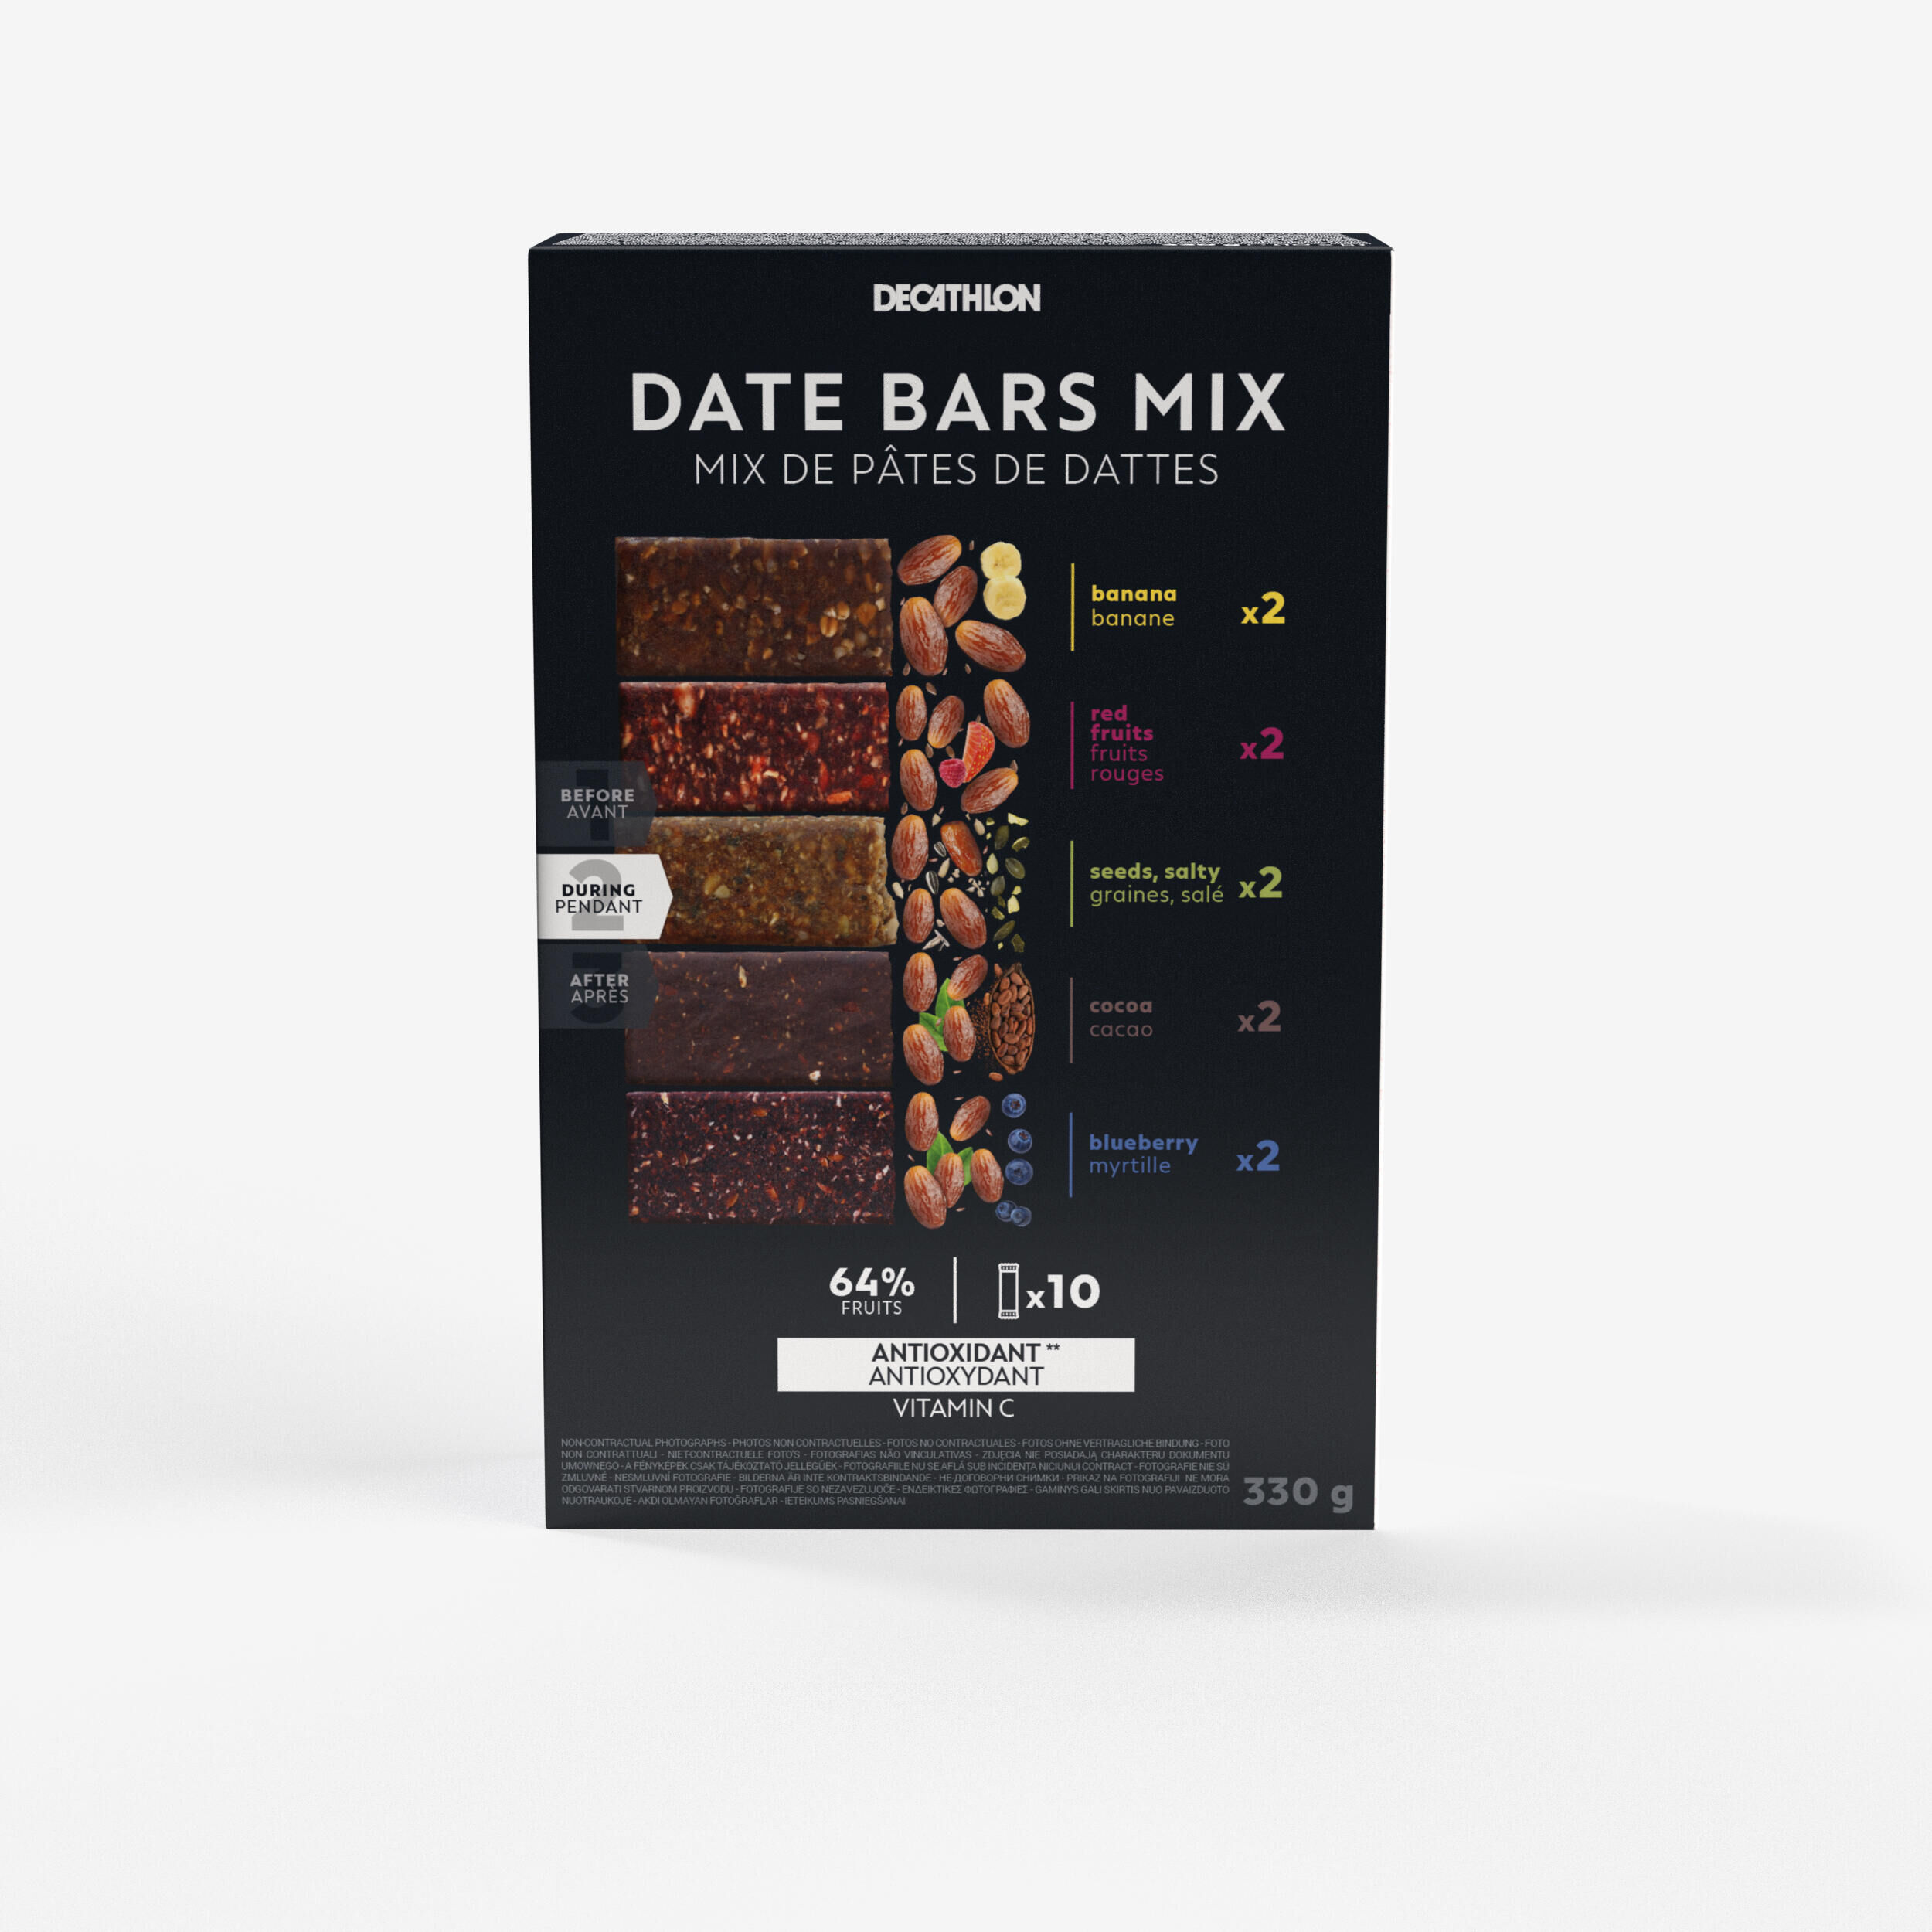 DECATHLON Mixed energy bars with dates - 10 bars